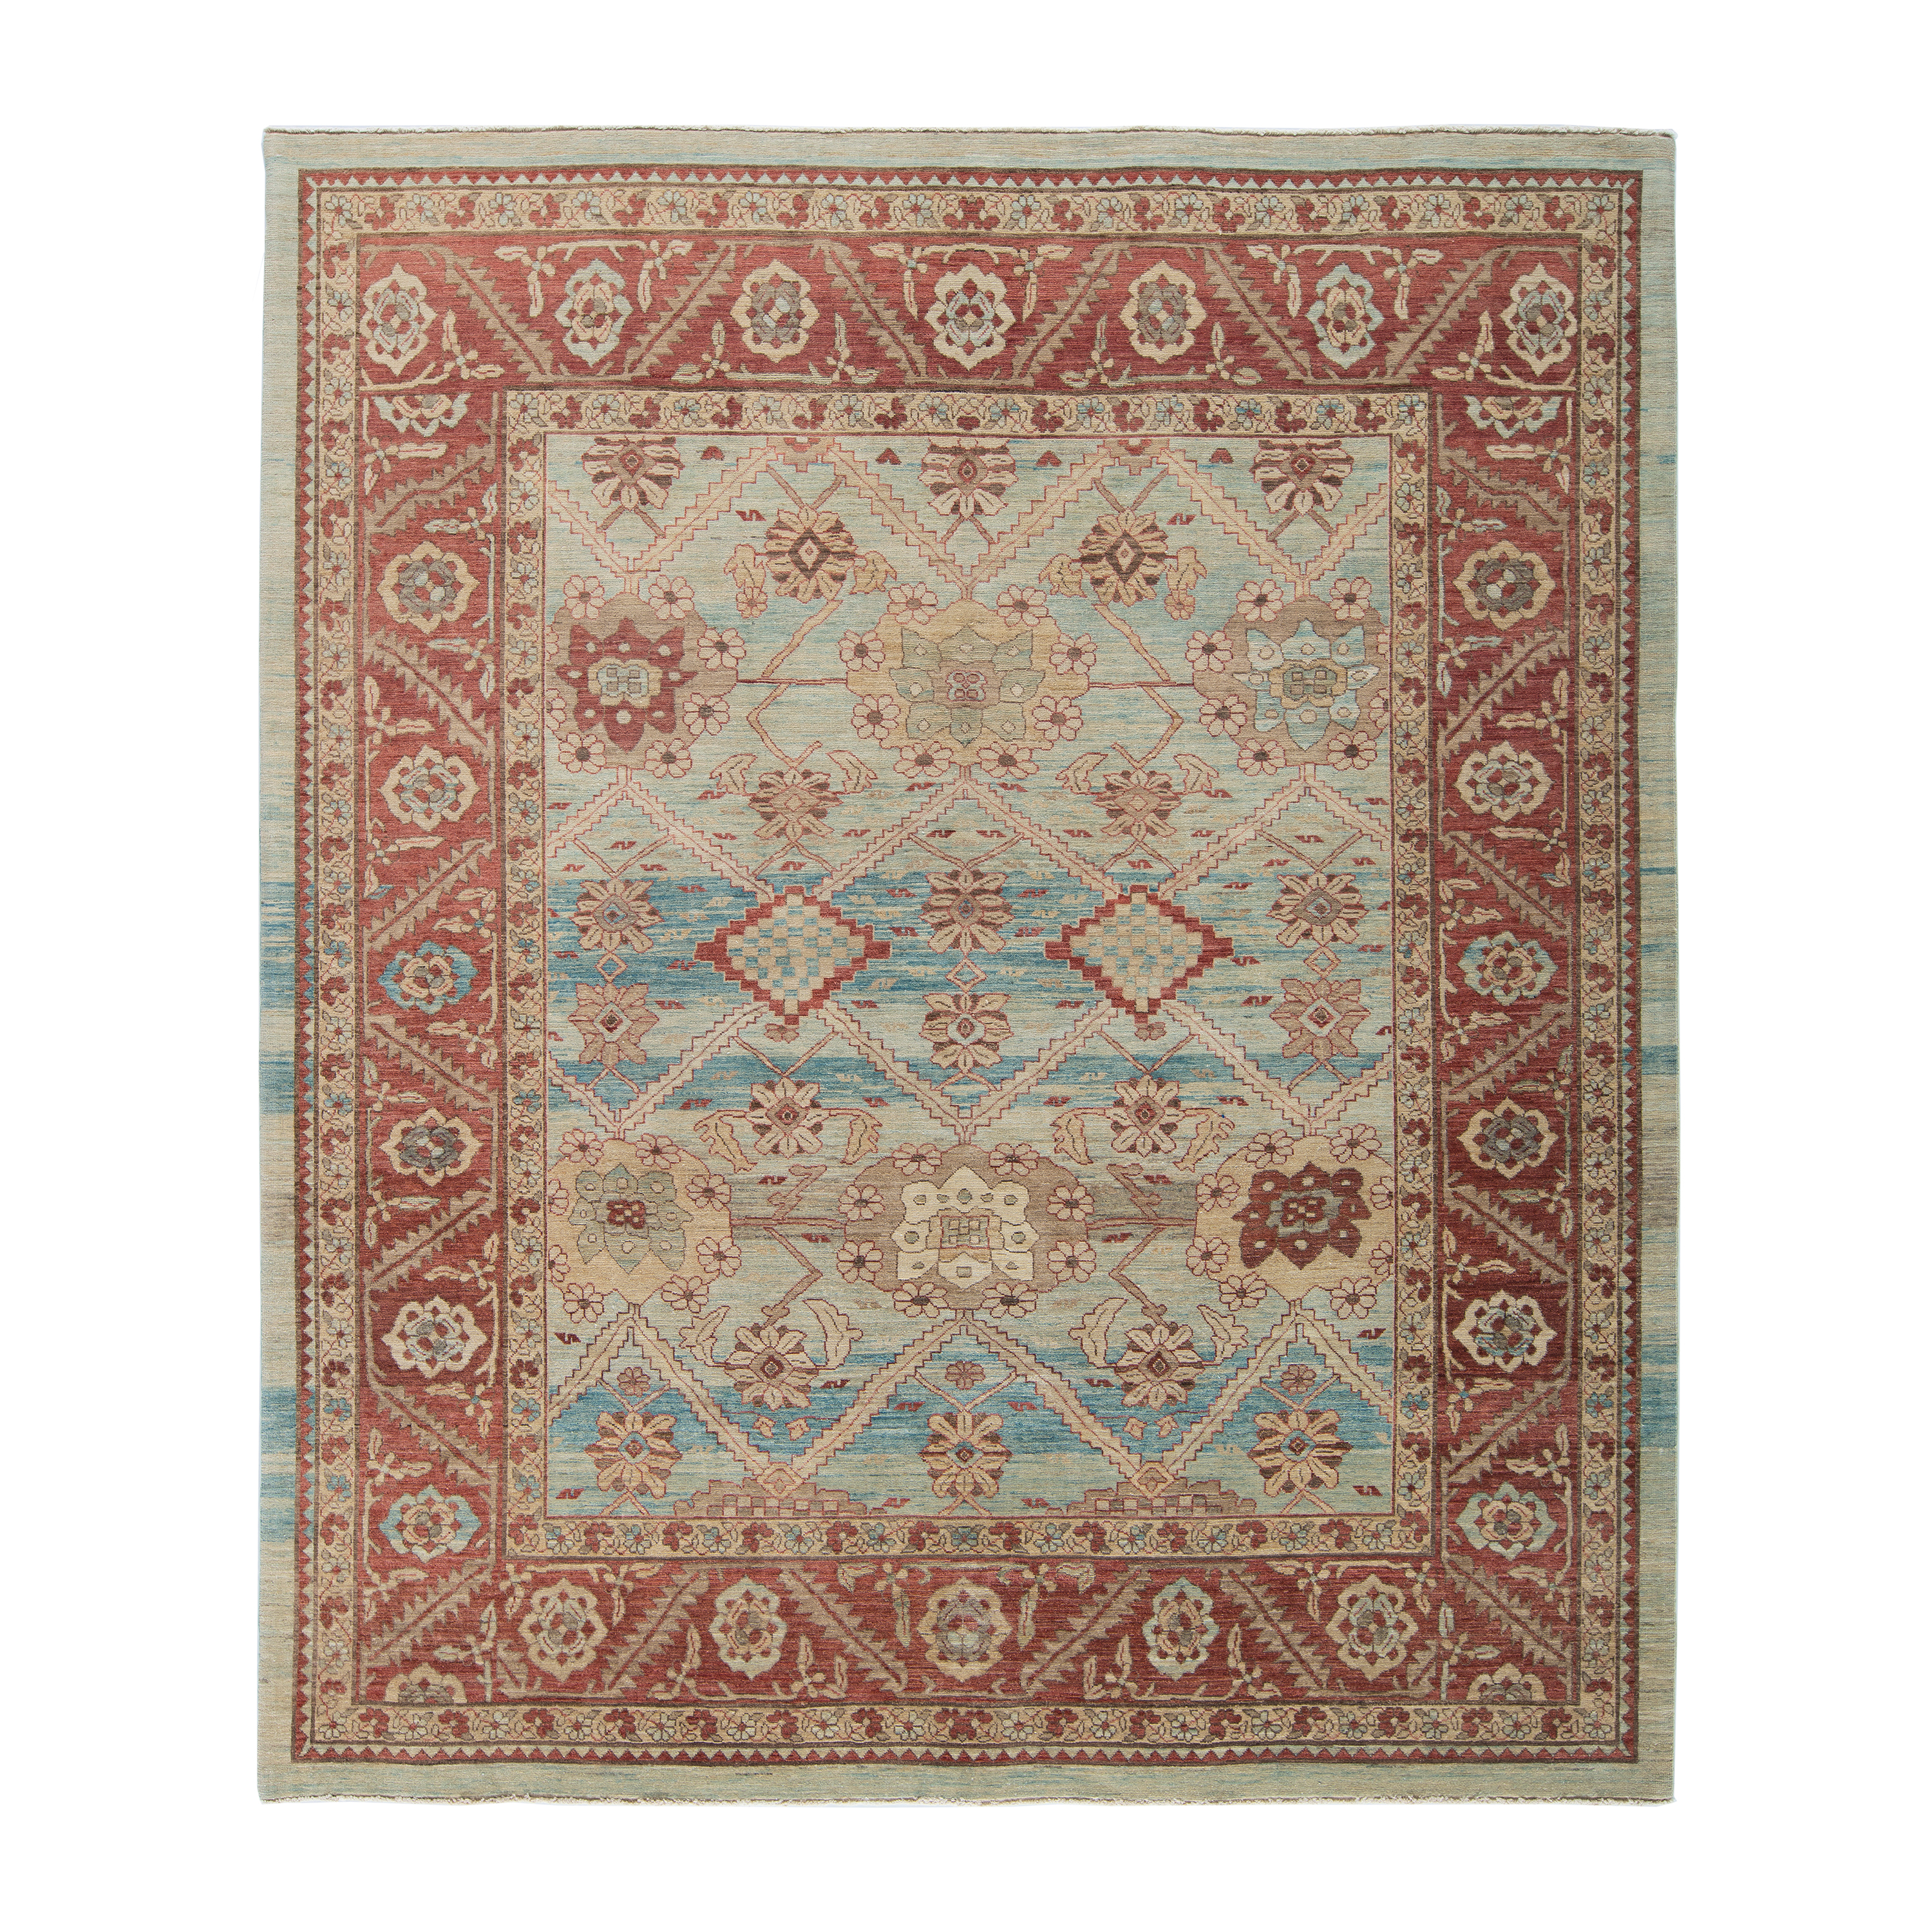 Bakshaish rug is made of 100% wool. 